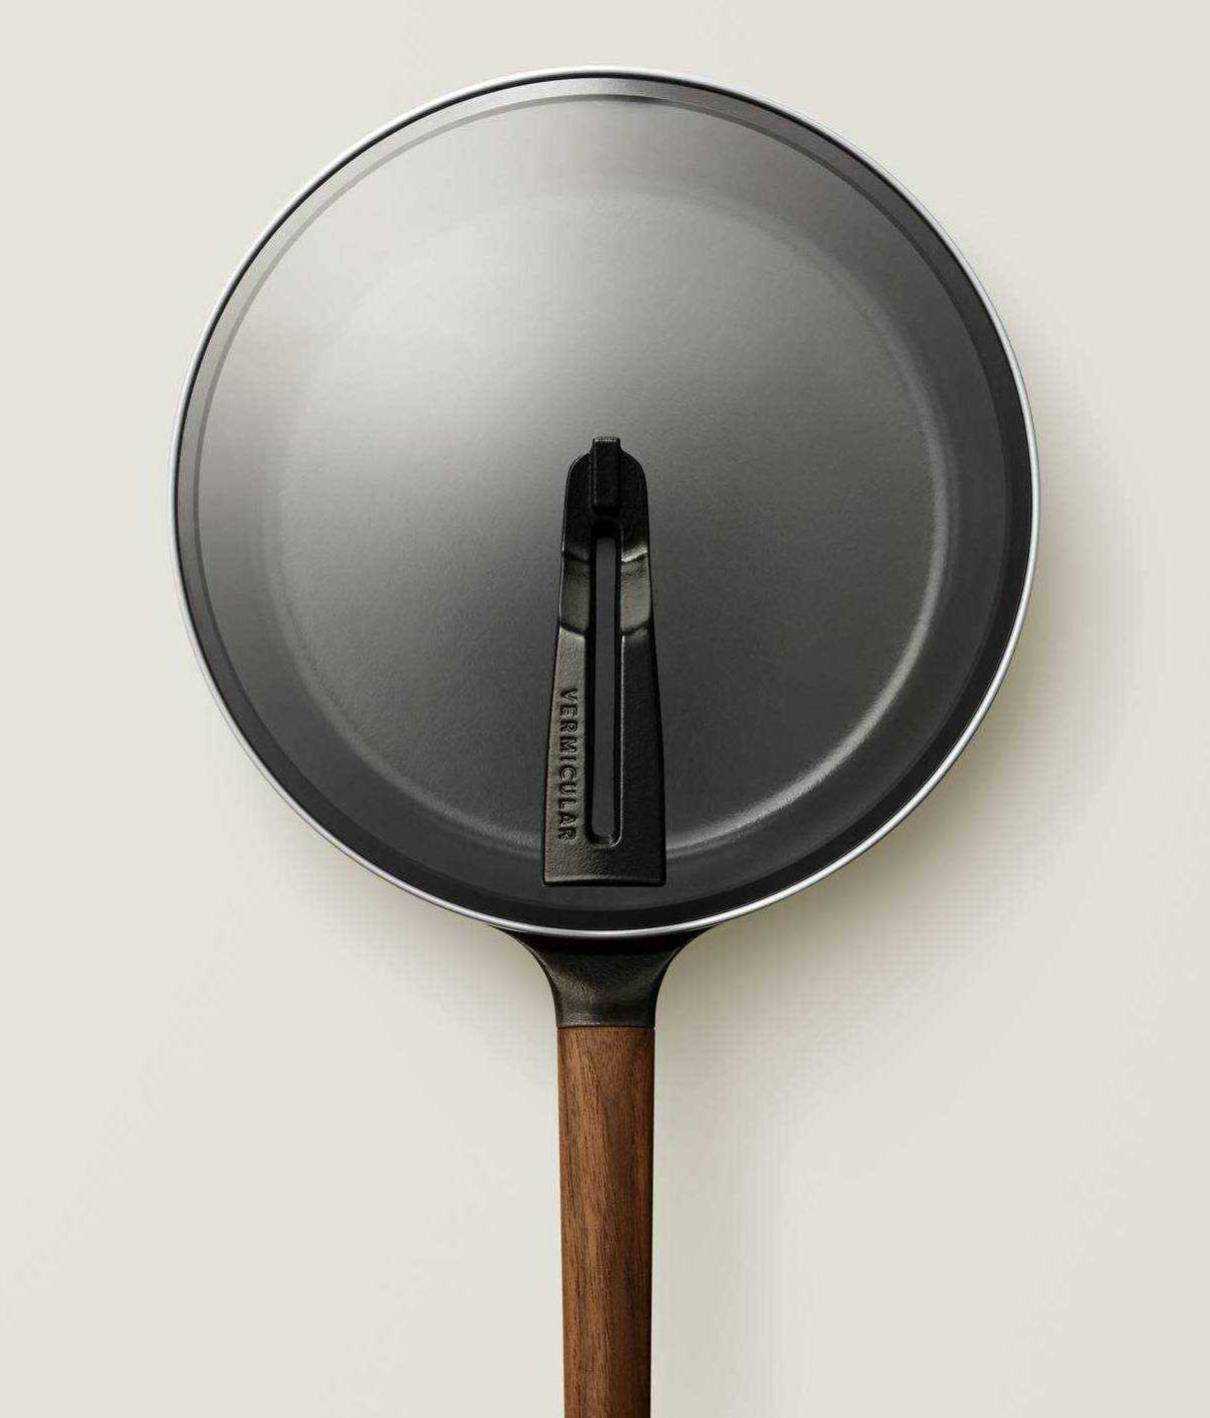 iF Design - VERMICULAR FRYING PAN